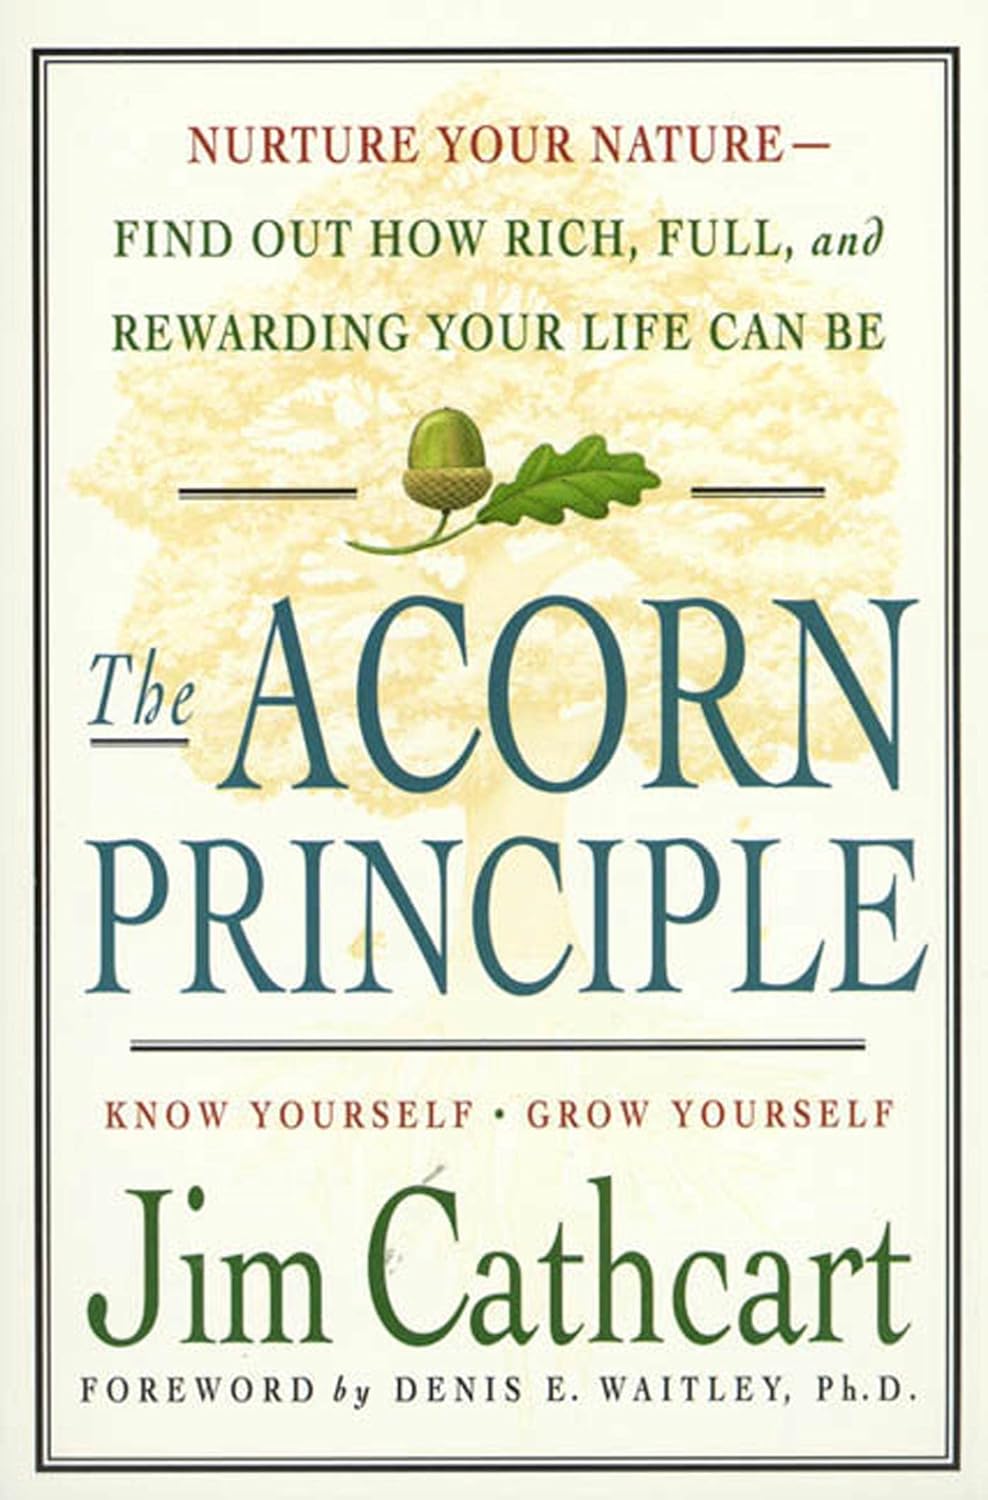 Jim Cathcart - The Acorn Principle. Know Yourself, Grow Yourself